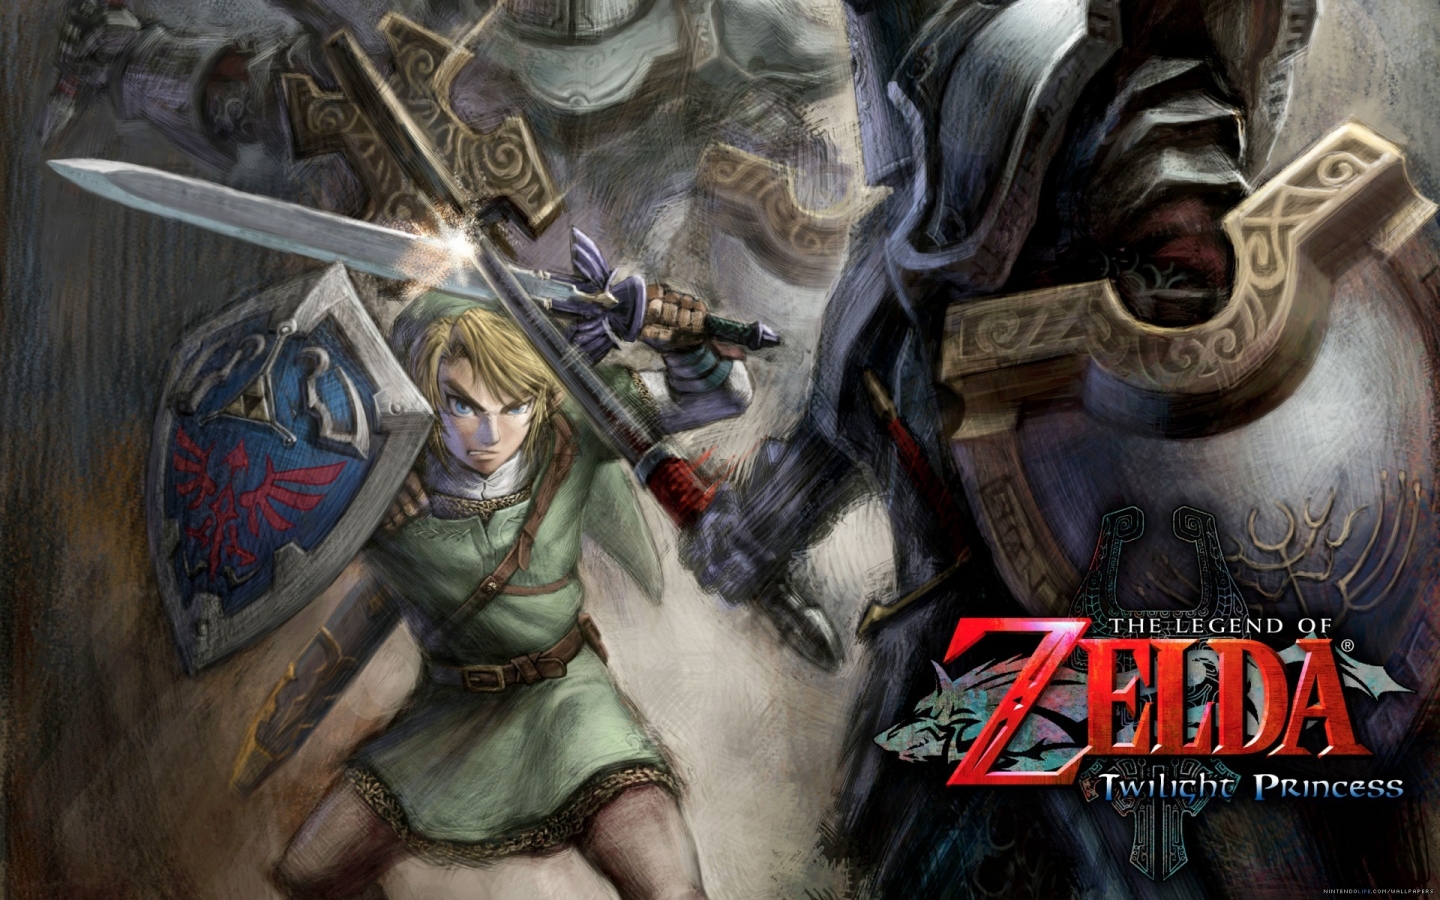 The Legend of Zelda Twilight Princess for 1440 x 900 widescreen resolution